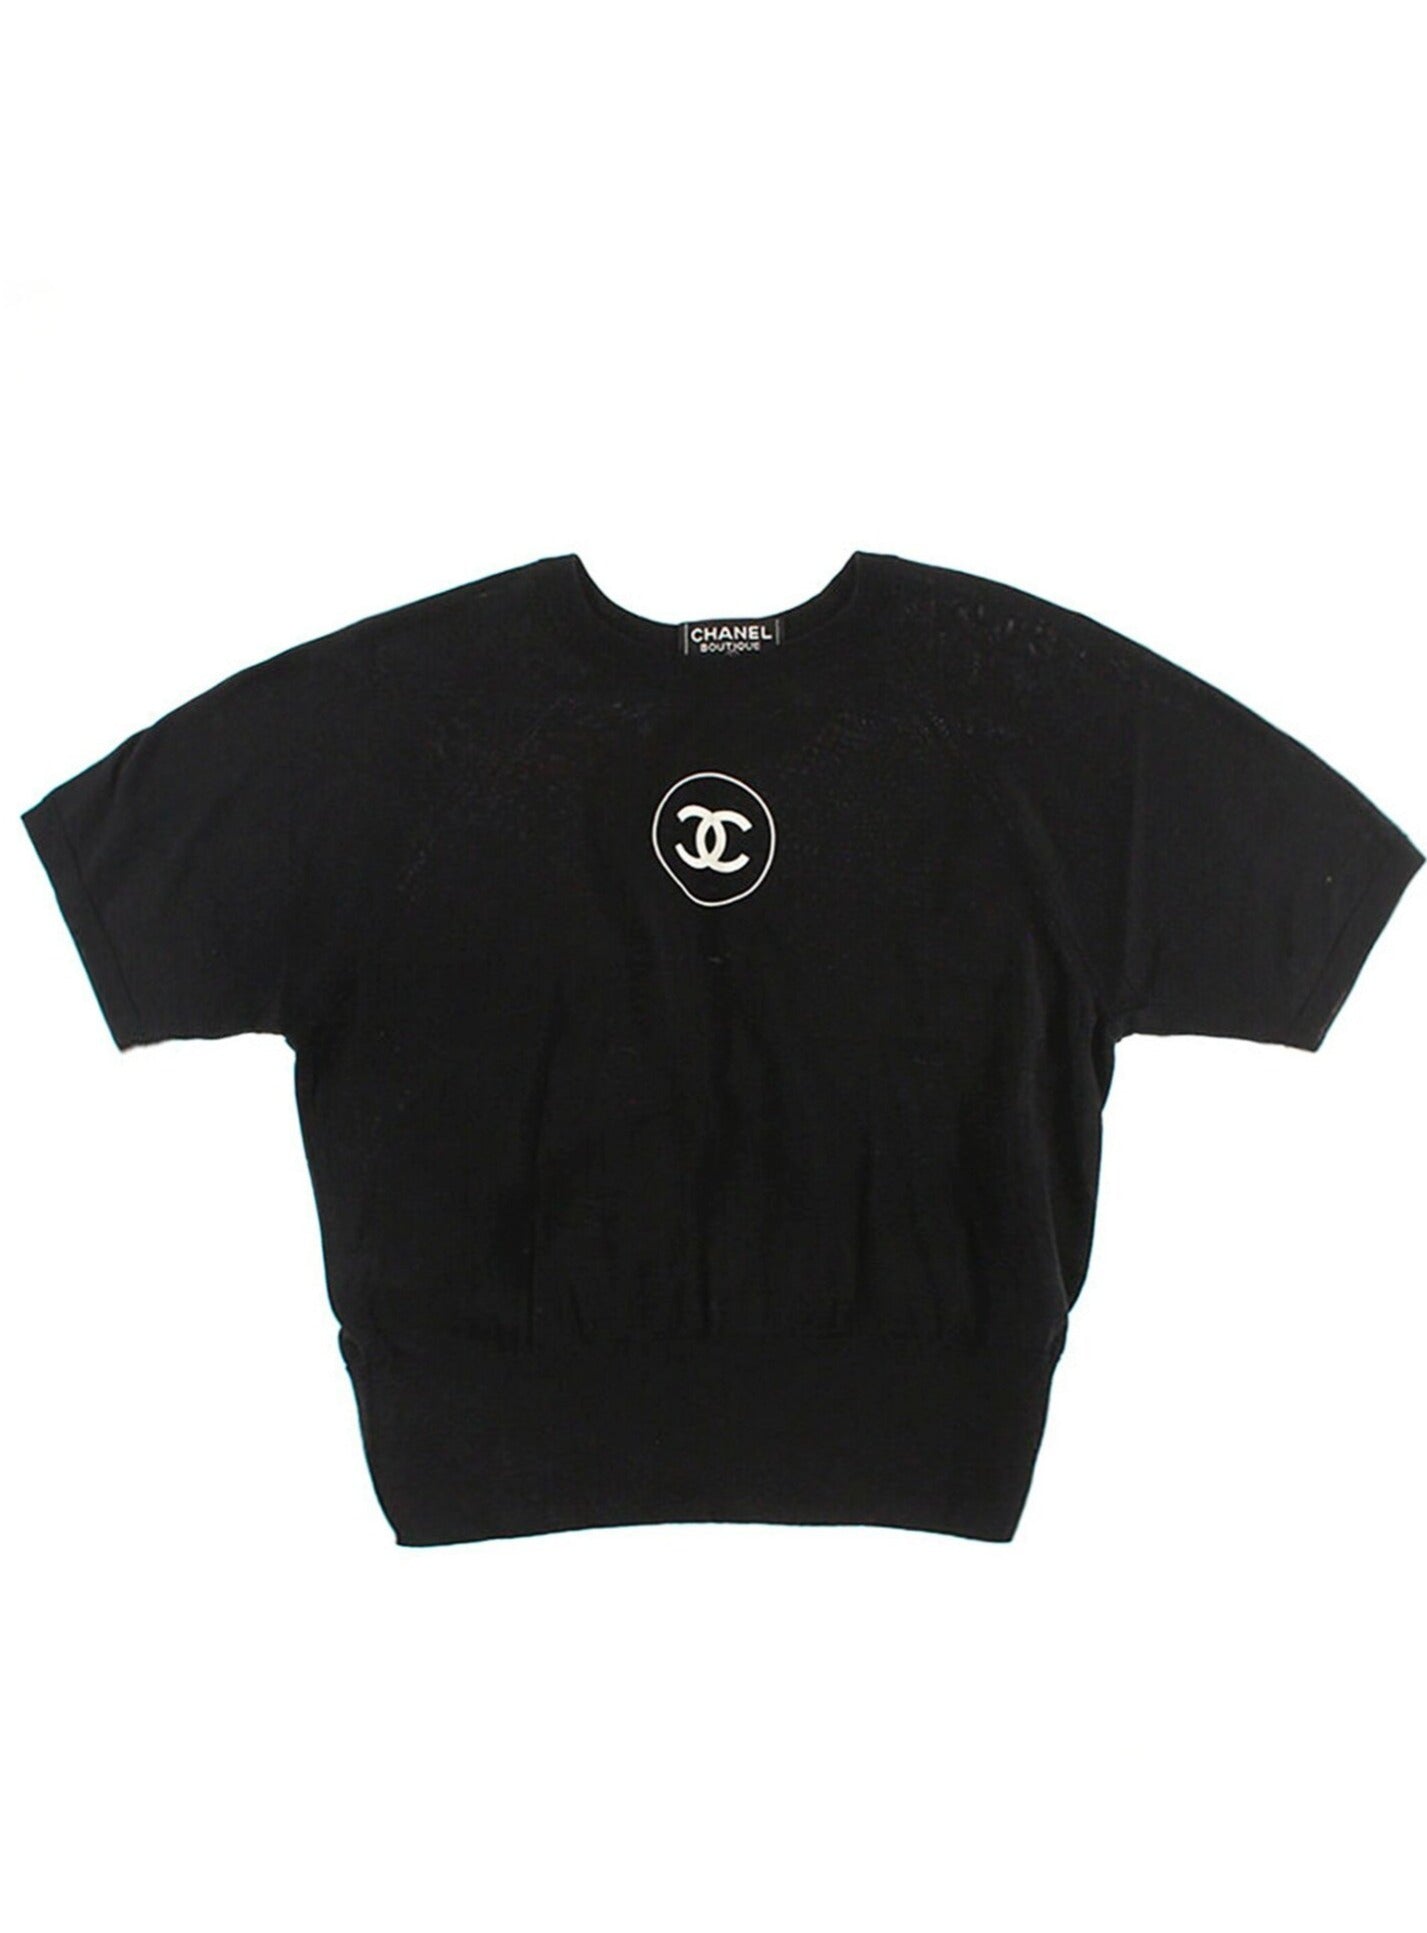 Chanel shirt - Gem